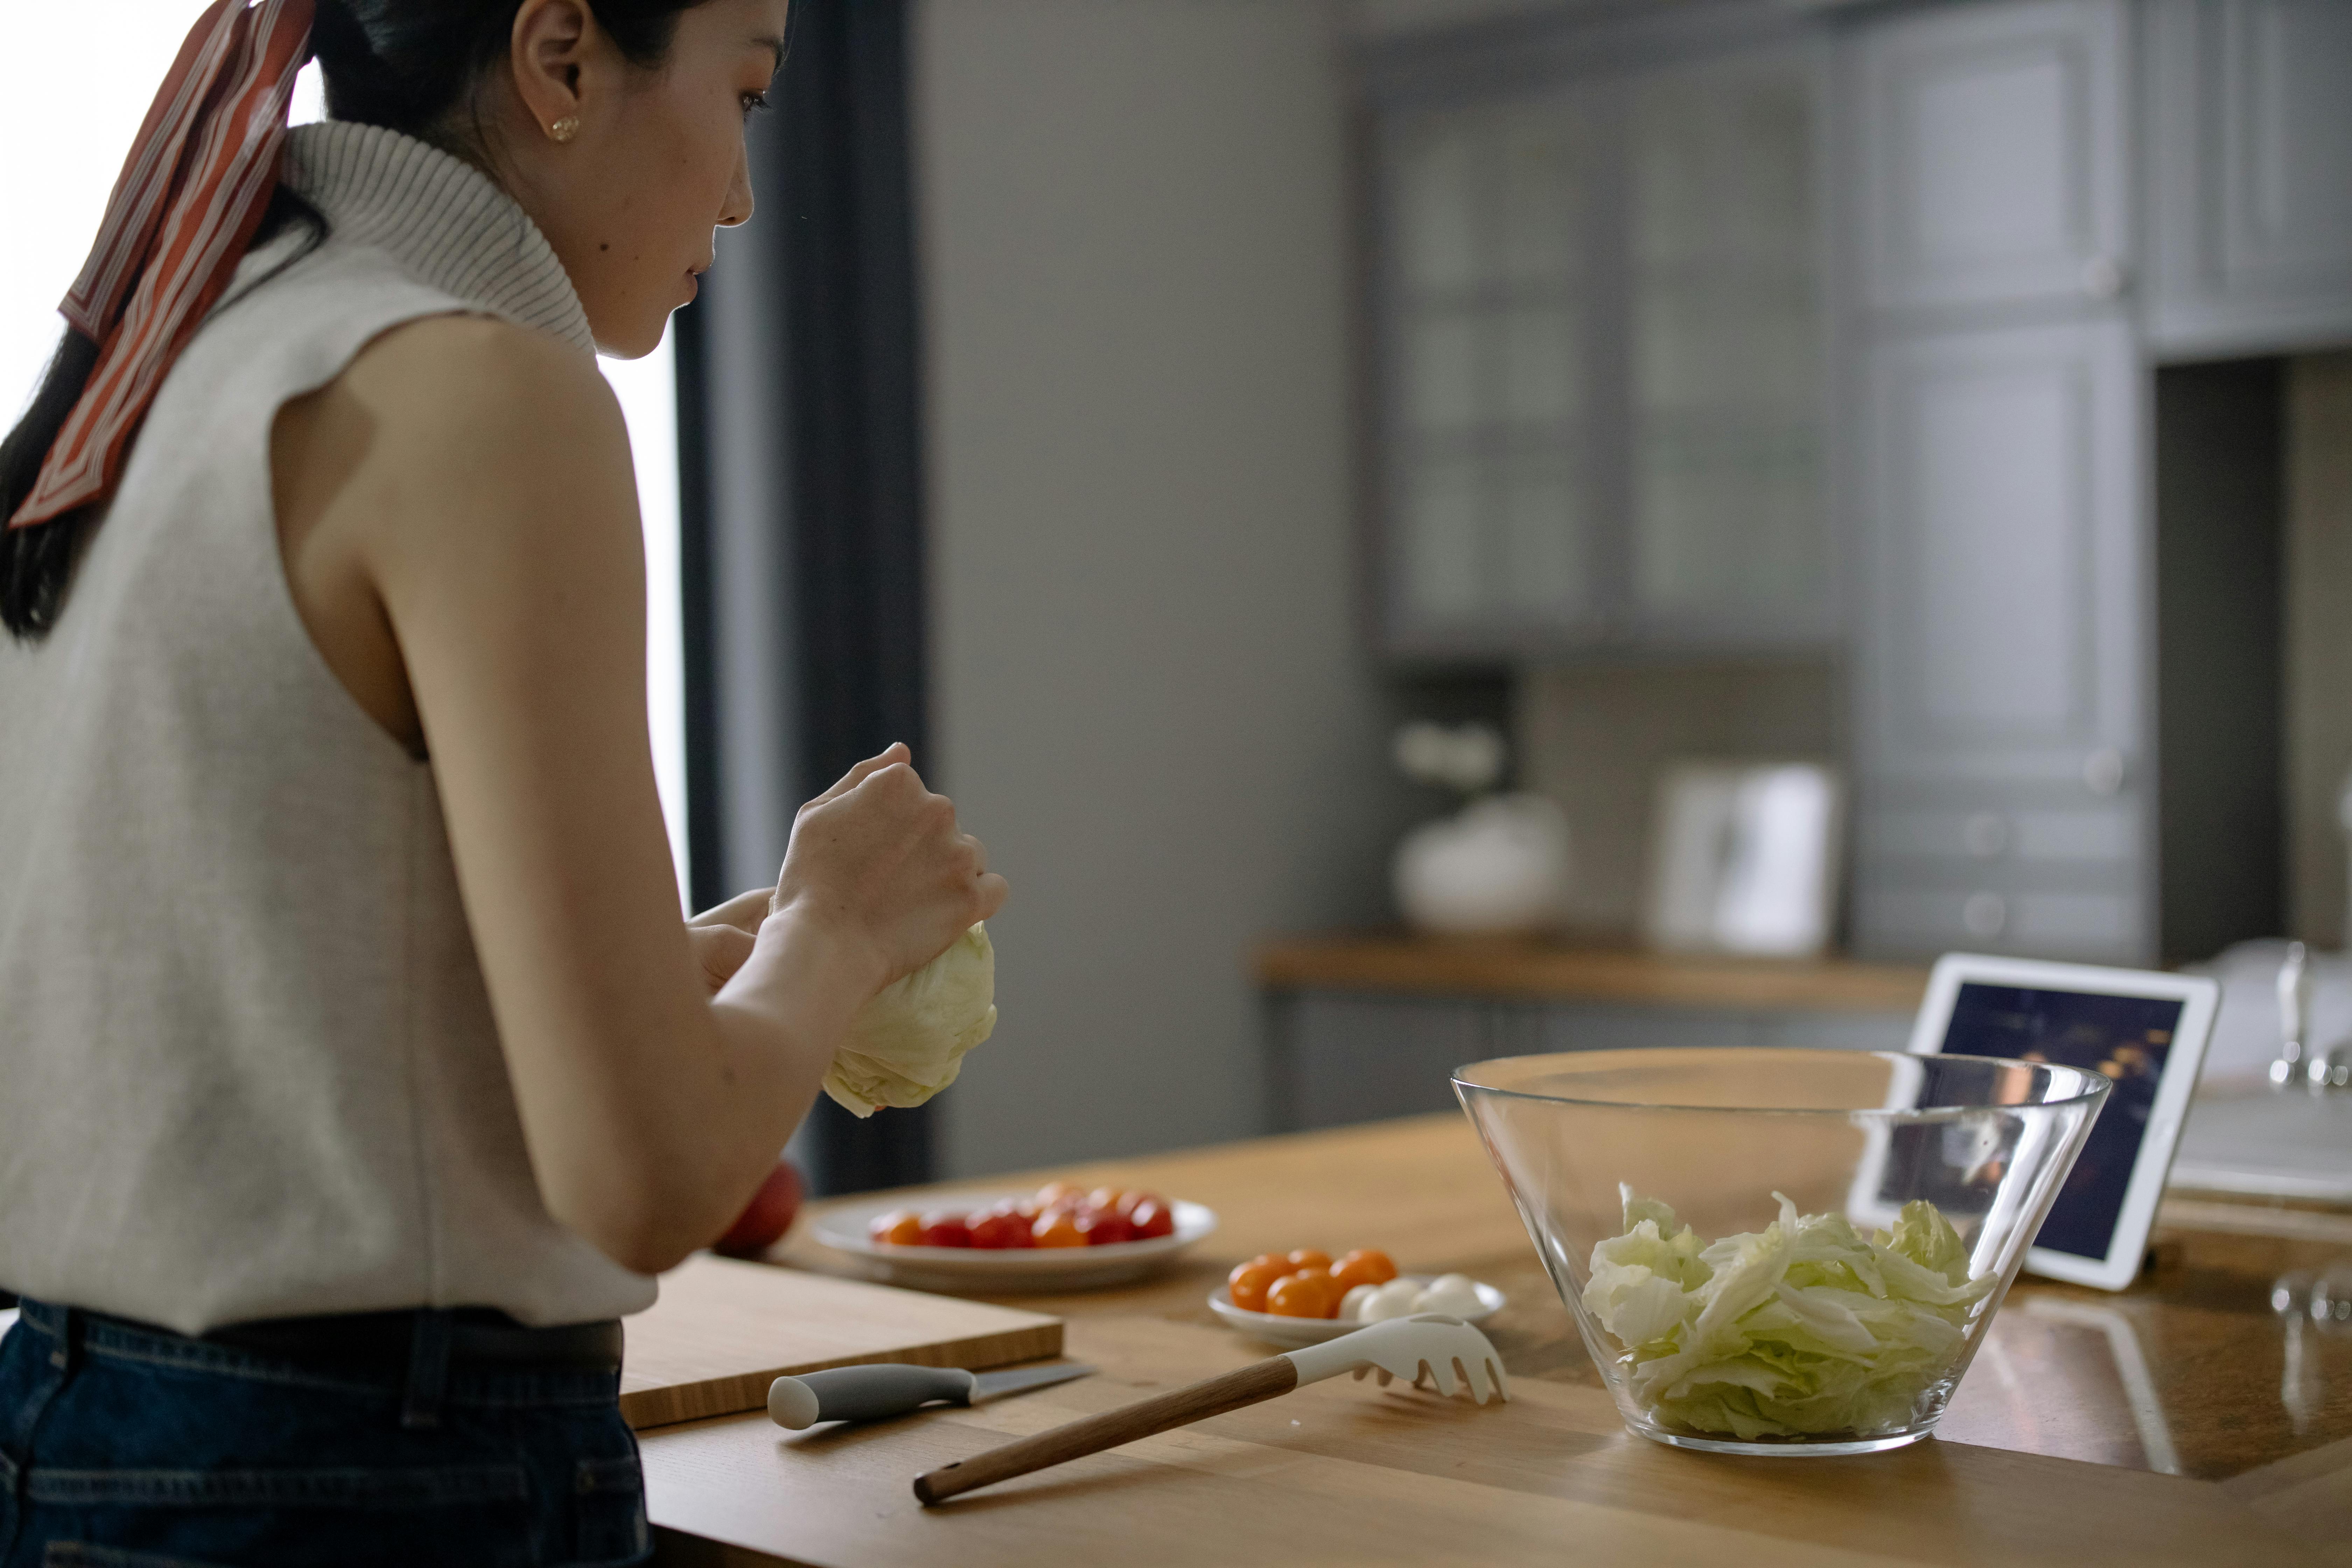 A woman preparing a meal | Source: Pexels